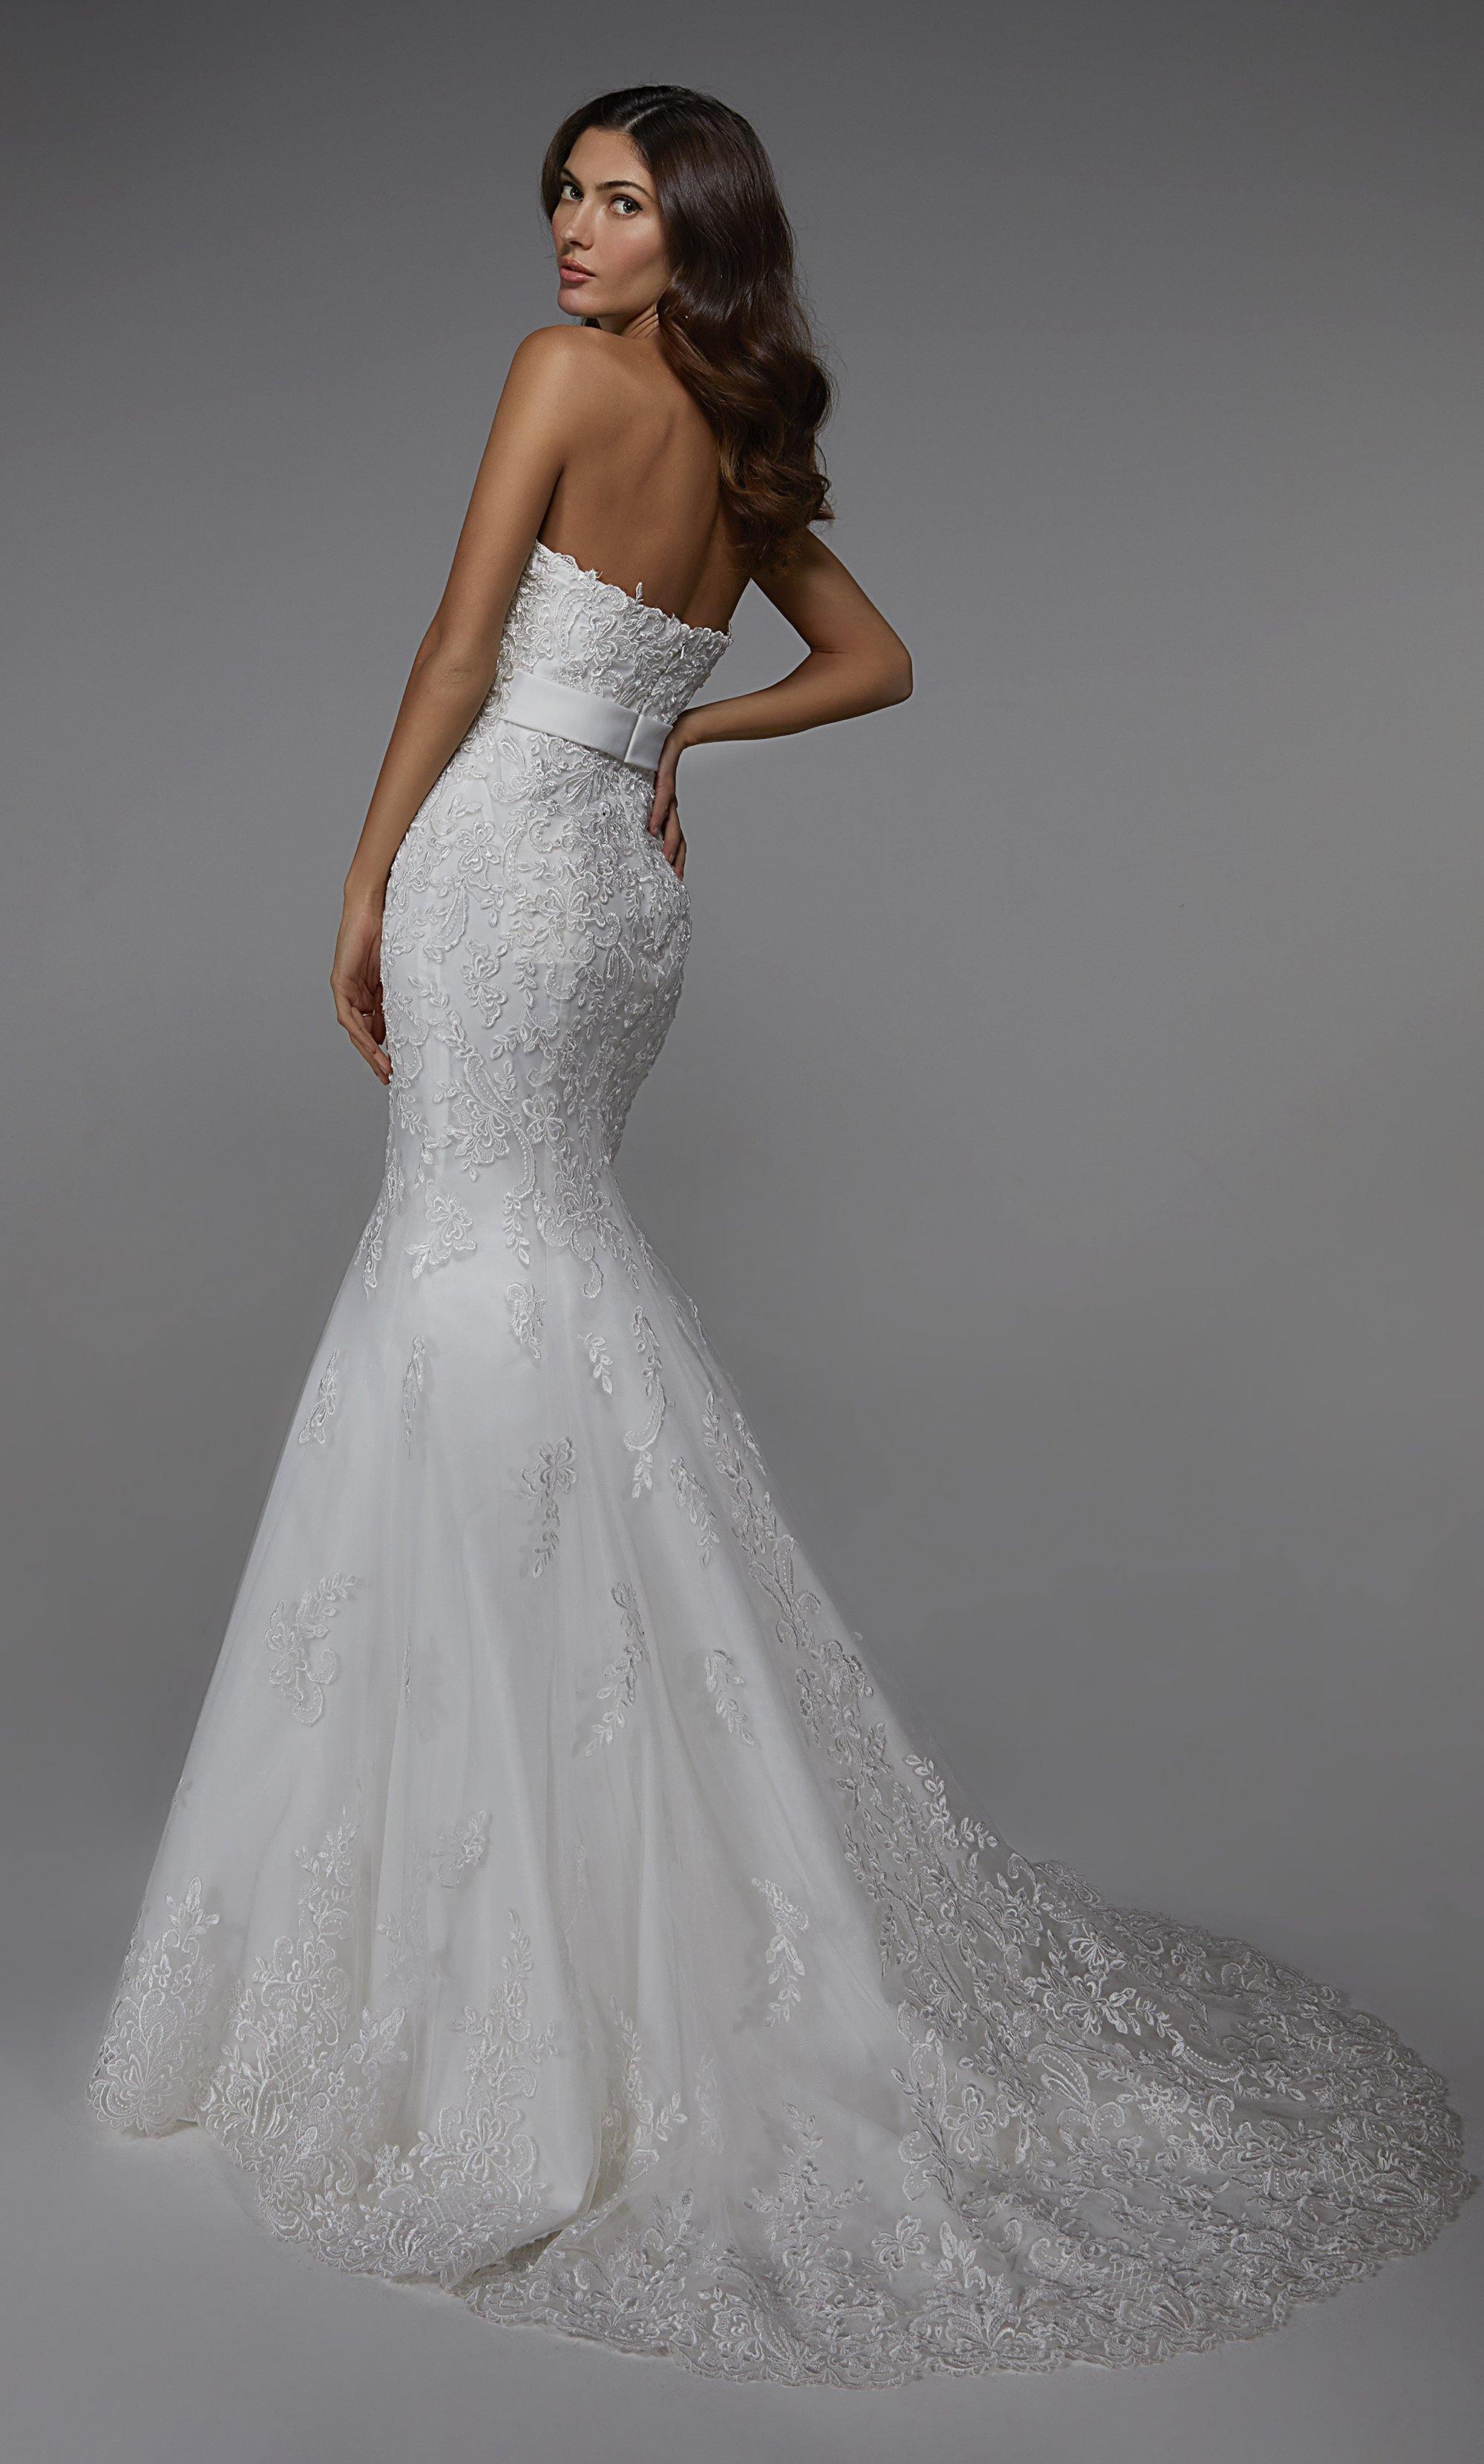 Formal Dress: 7032. Long Wedding Dress, Strapless, Mermaid